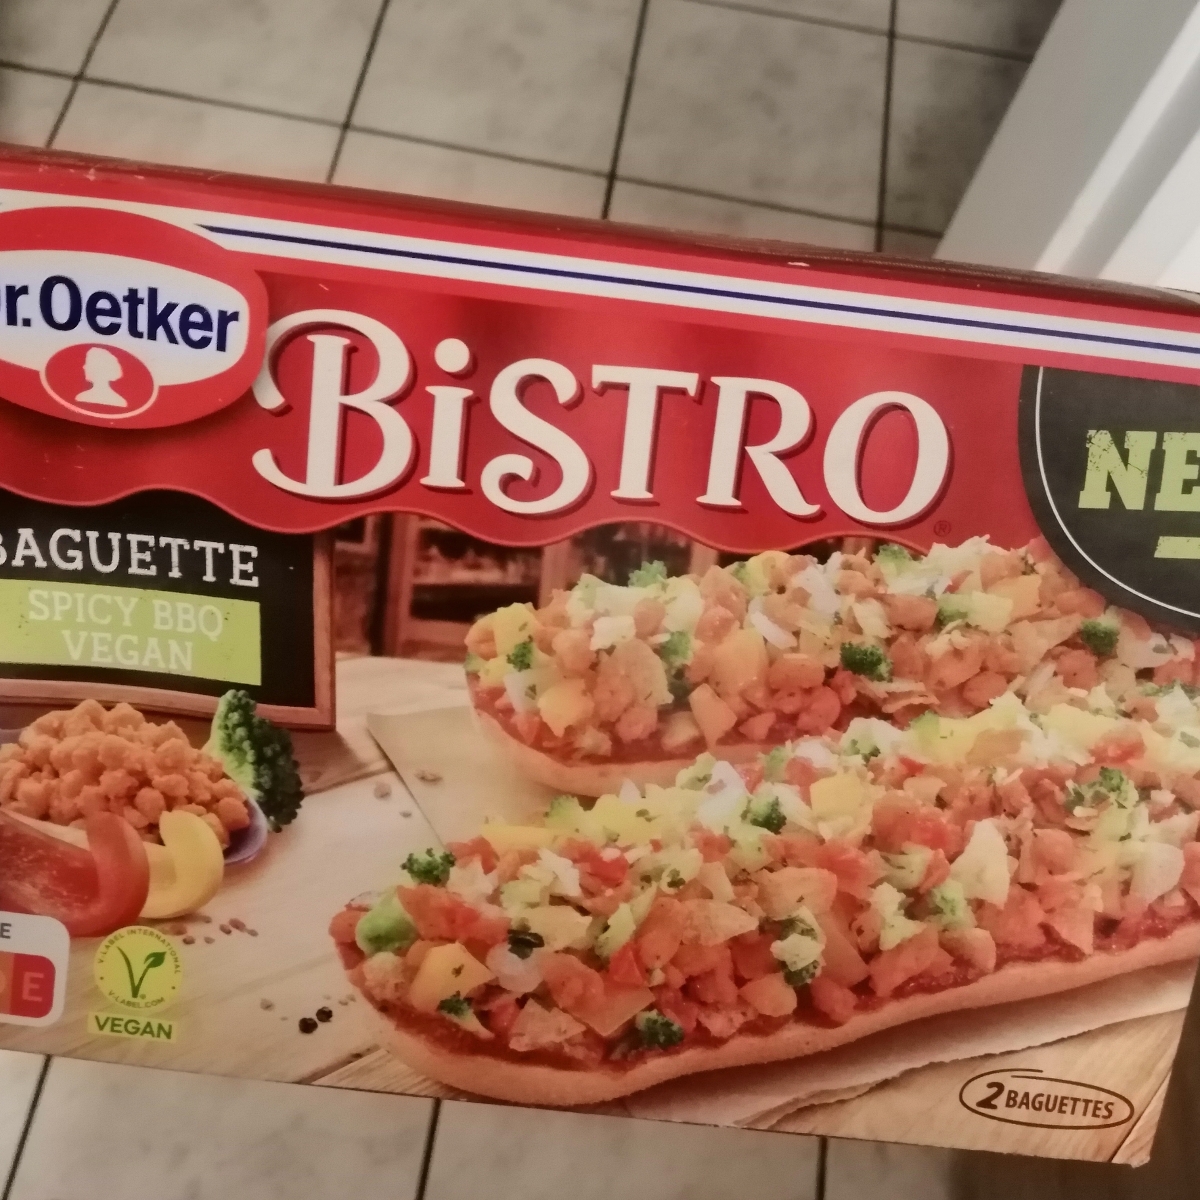 Dr. Oetker Bistro Baguette Spicy BBQ Vegan Review | abillion